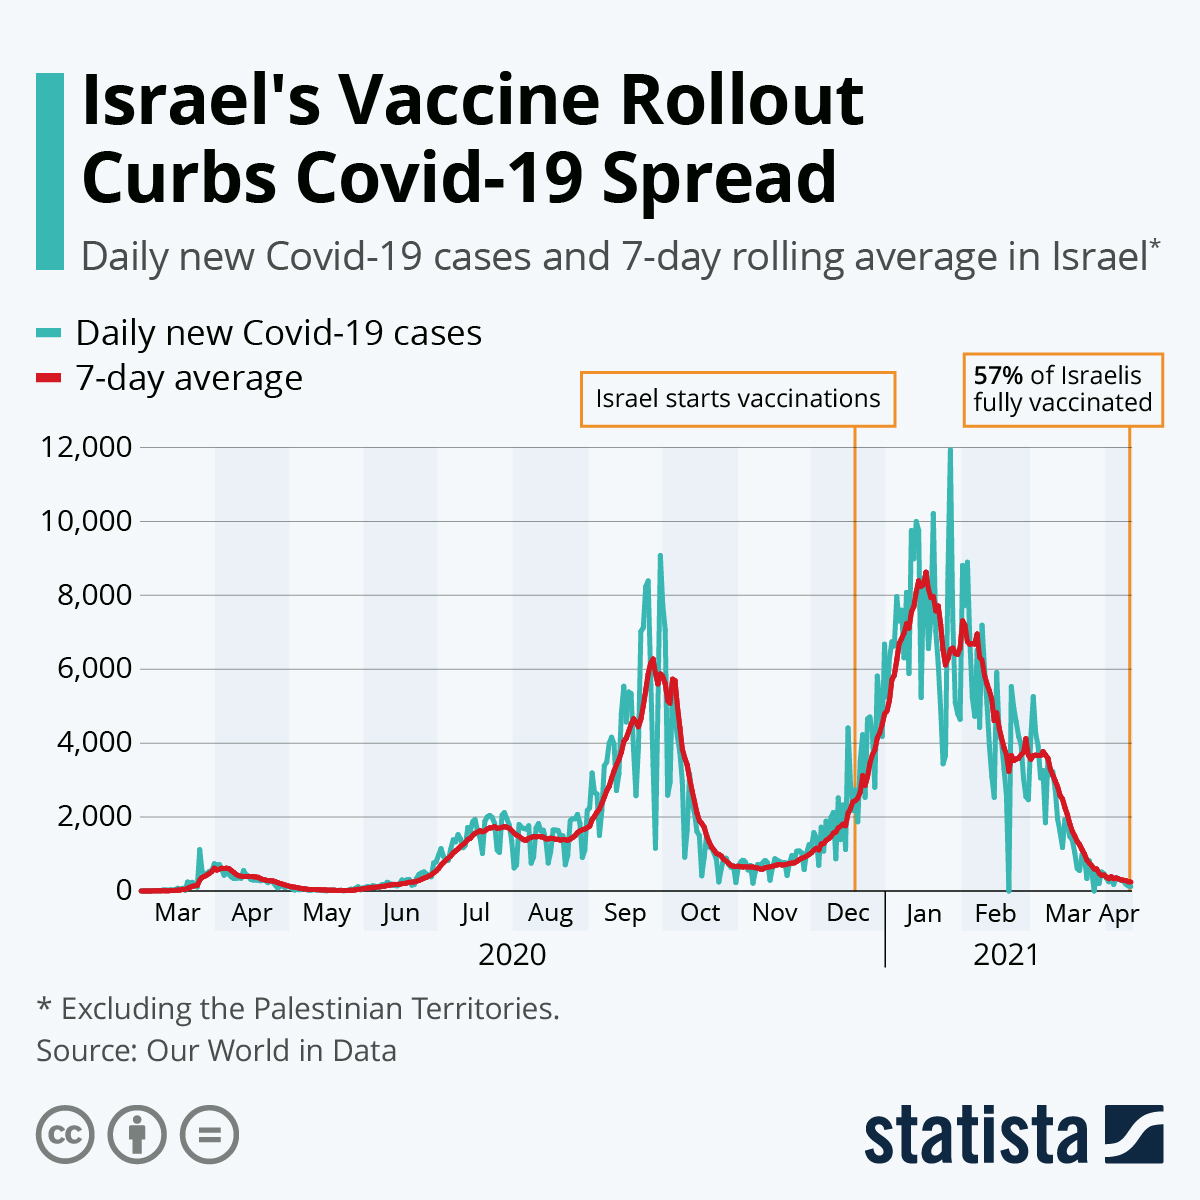 Israel's Vaccine Rollout Curbs Covid-19 Spread